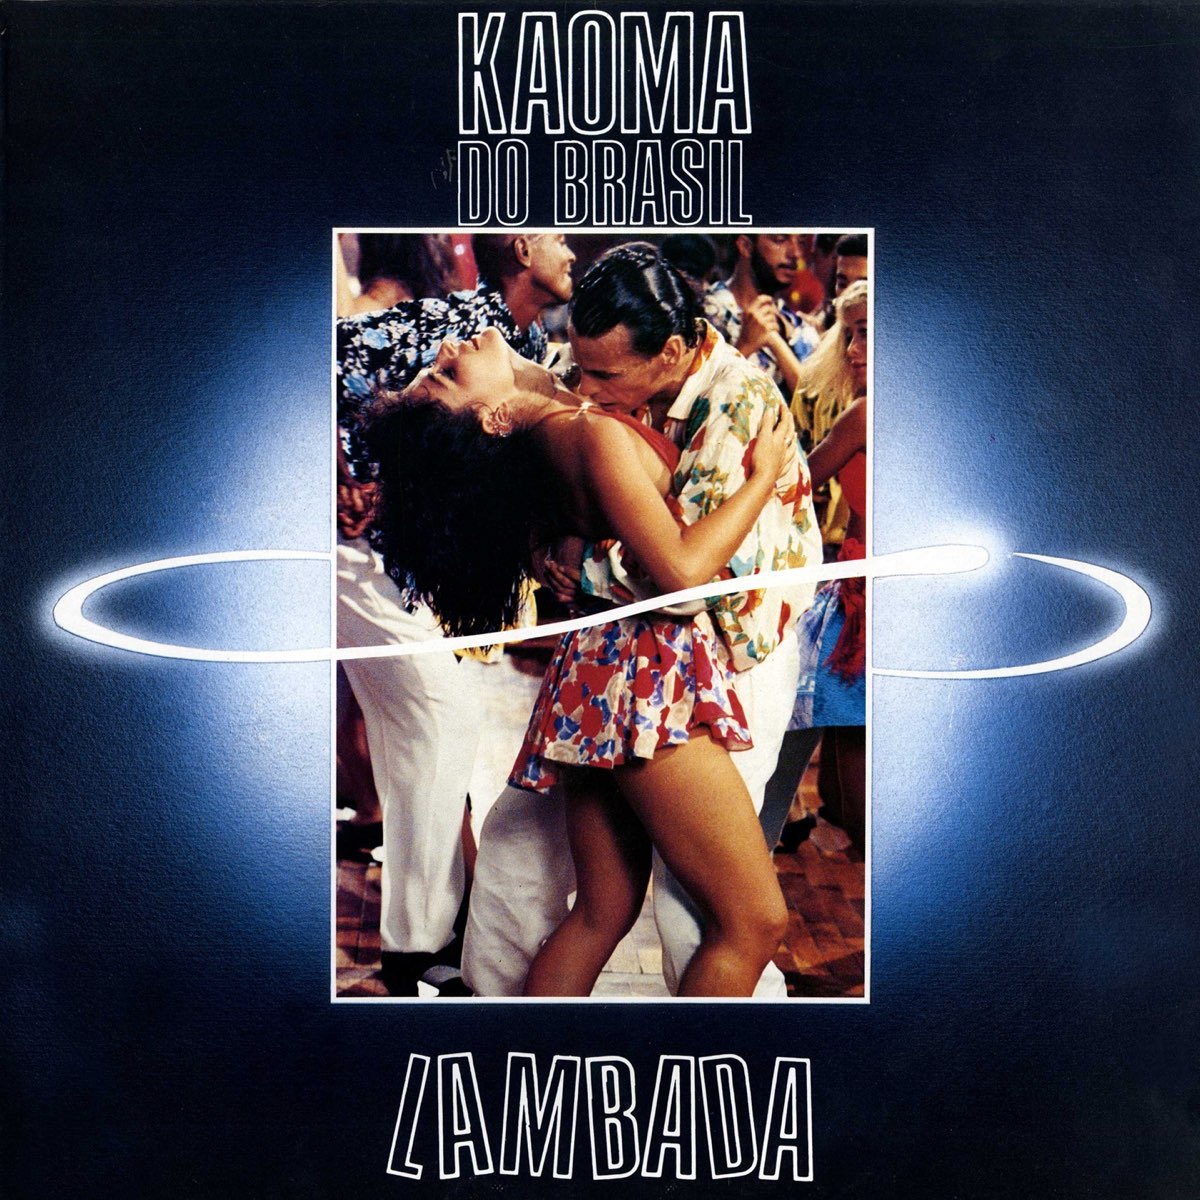 Lambada (Original Motion Picture Soundtrack) - Album by Kaoma do